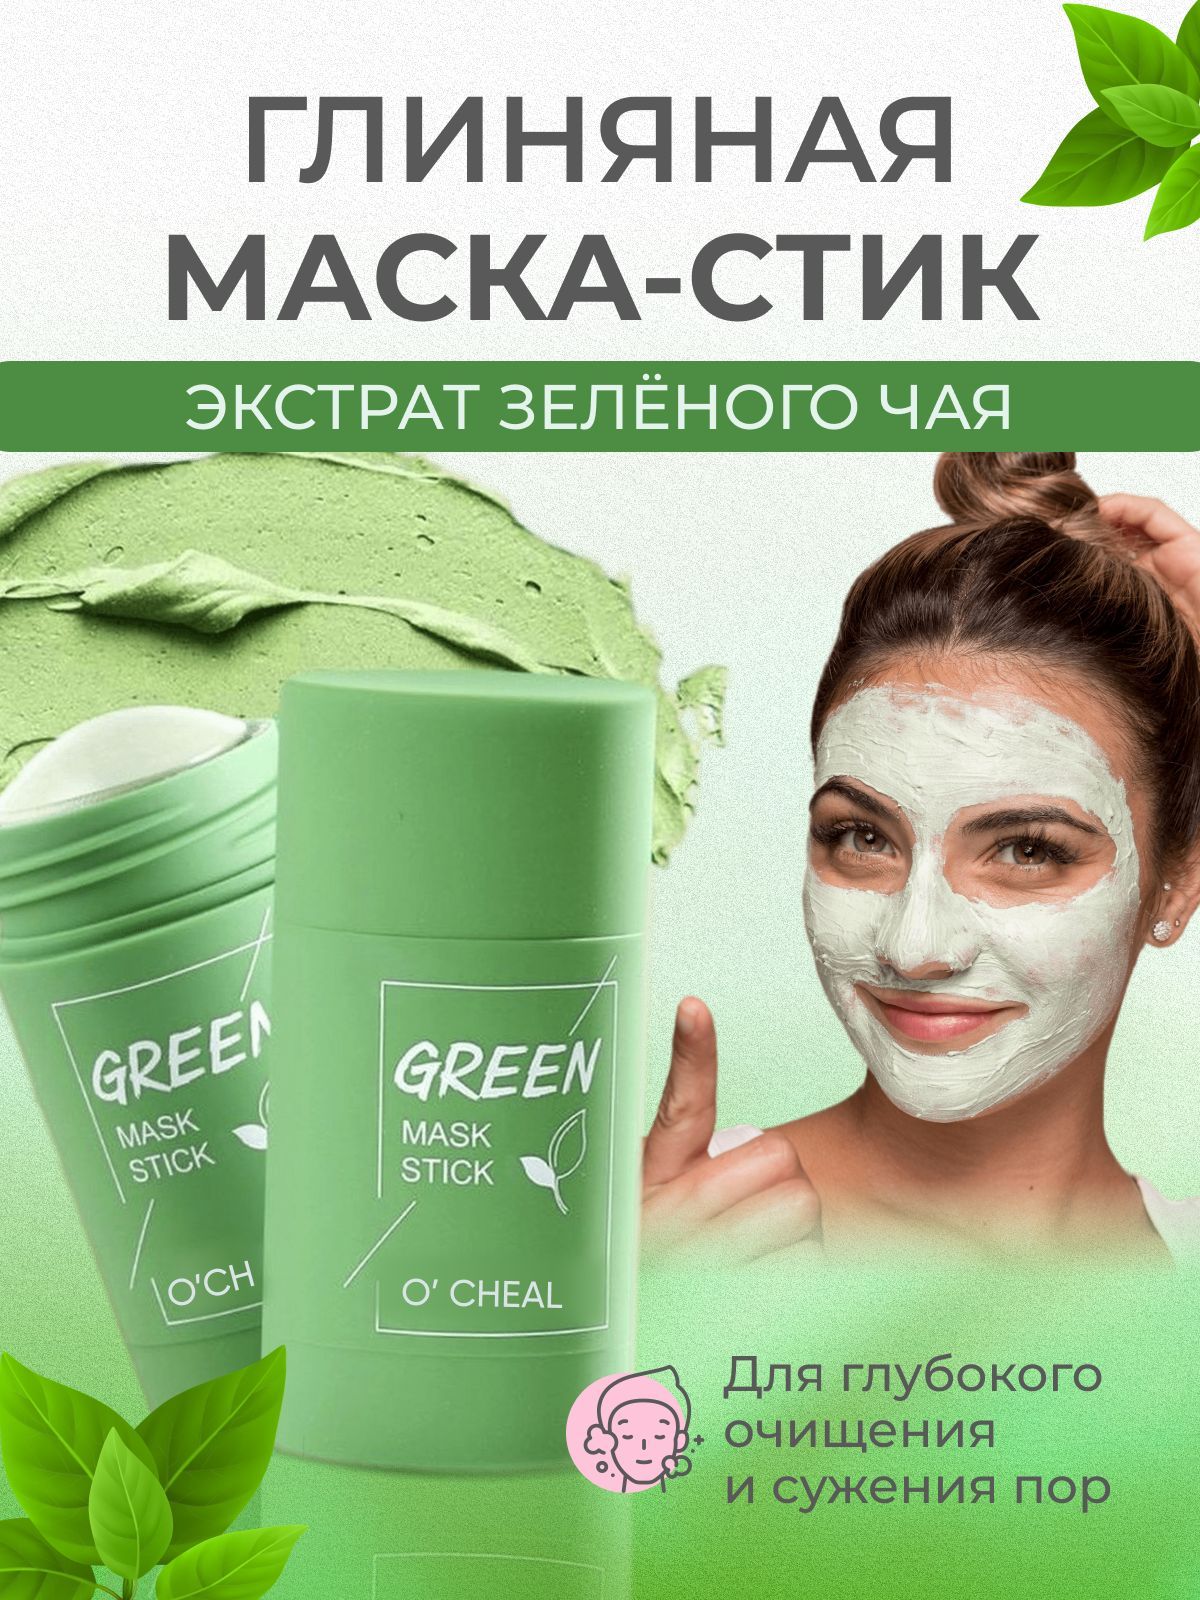 Зеленая глиняная маска для лица. Маска Green o'Cheal. O'Cheal маска-стик Green Mask Stick с экстрактом зеленого чая обзоры. Стик для лица. Зеленая маска отзывы